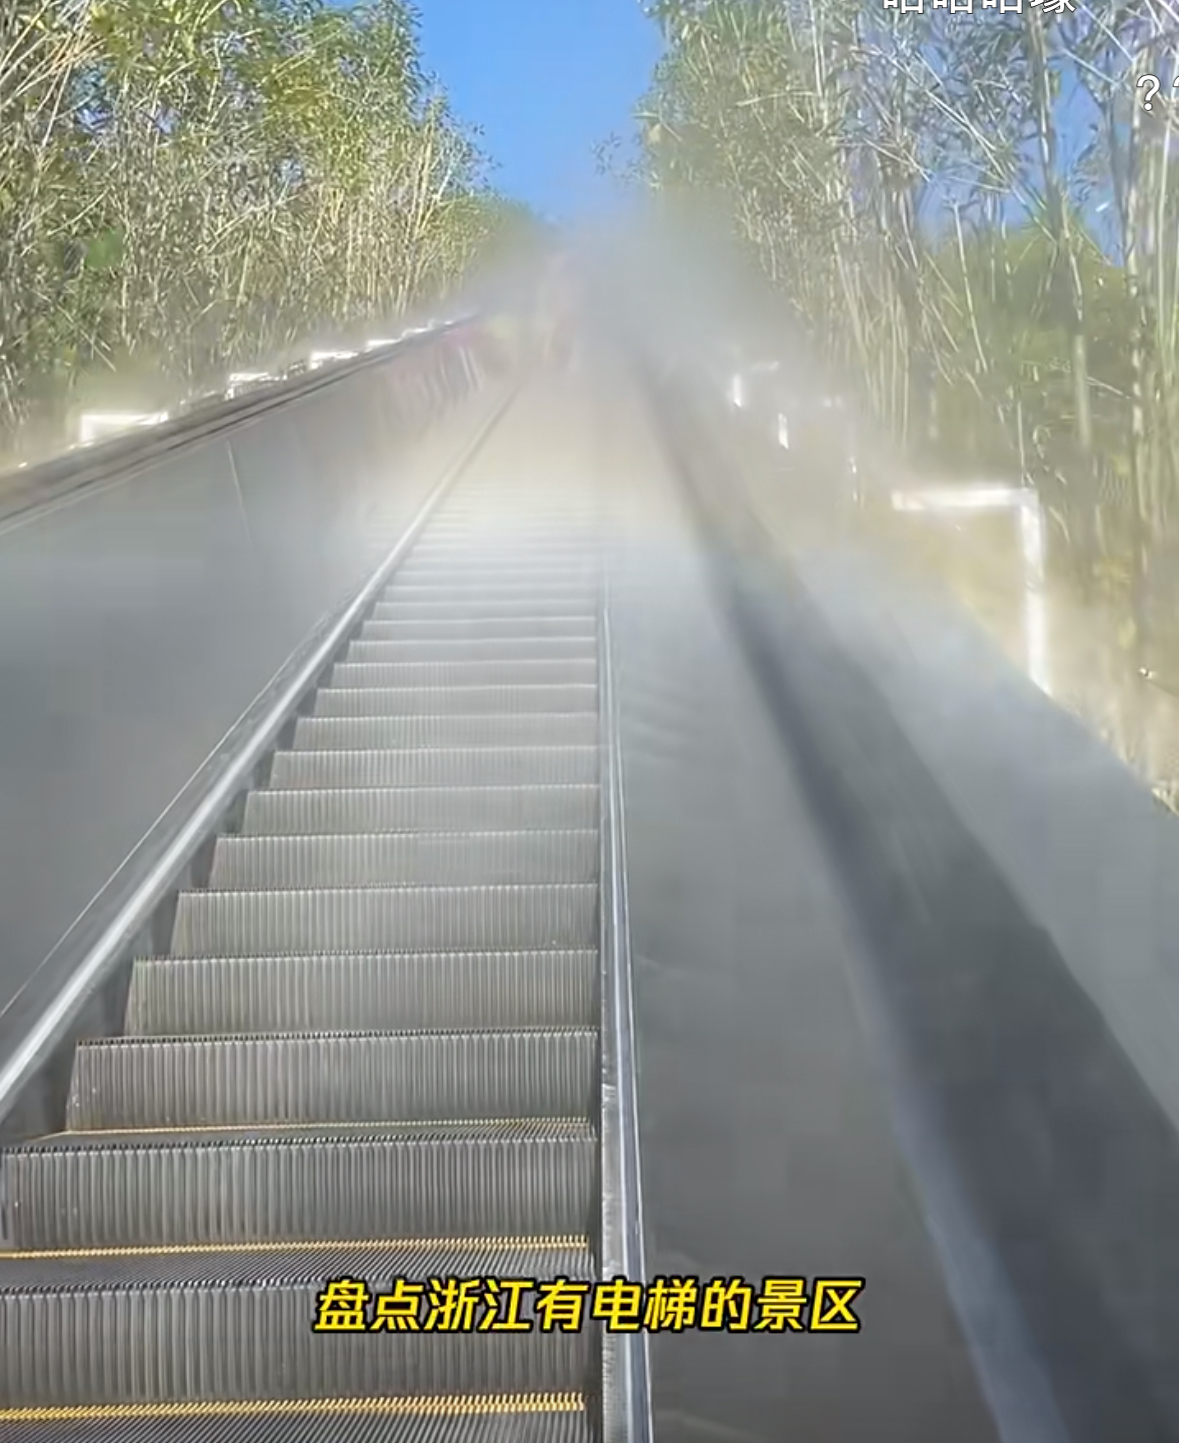 China escalator mountains